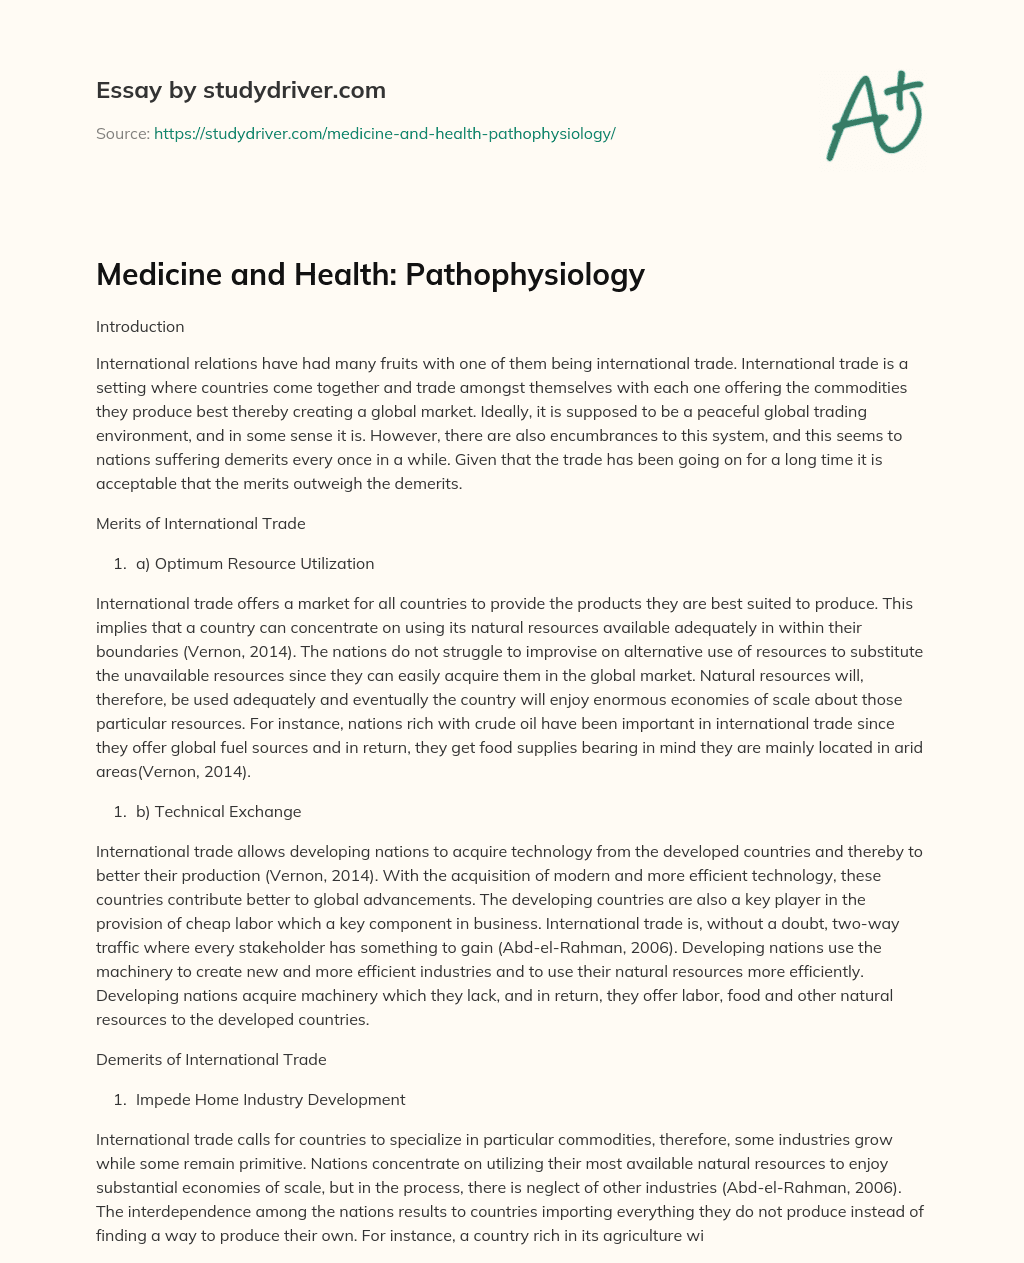 Medicine and Health: Pathophysiology essay